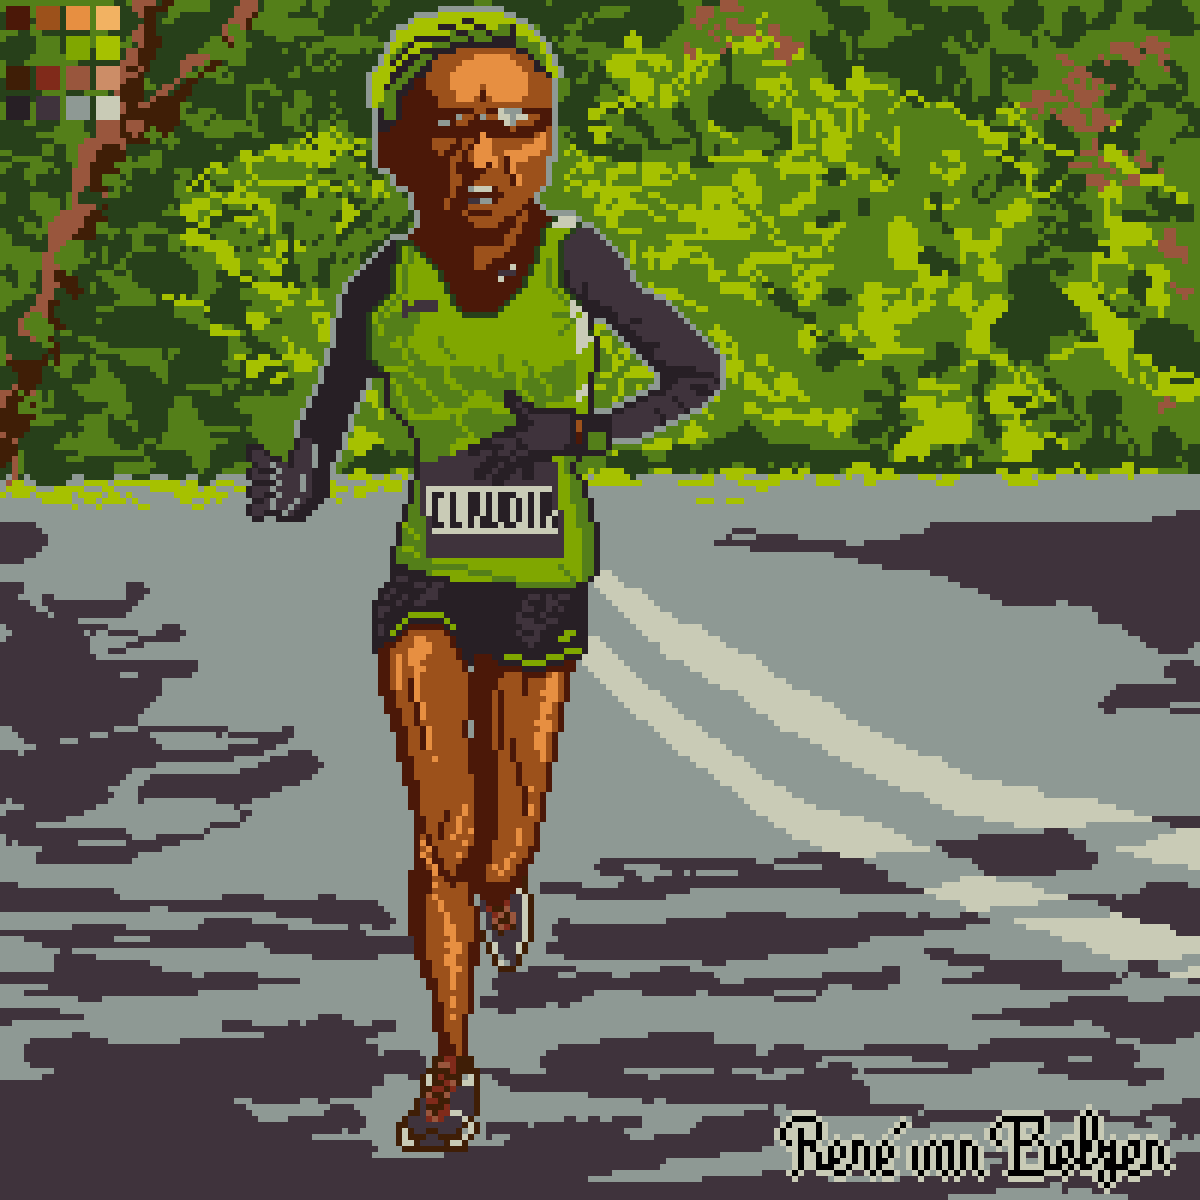 pixel art of road runner woman with race bib